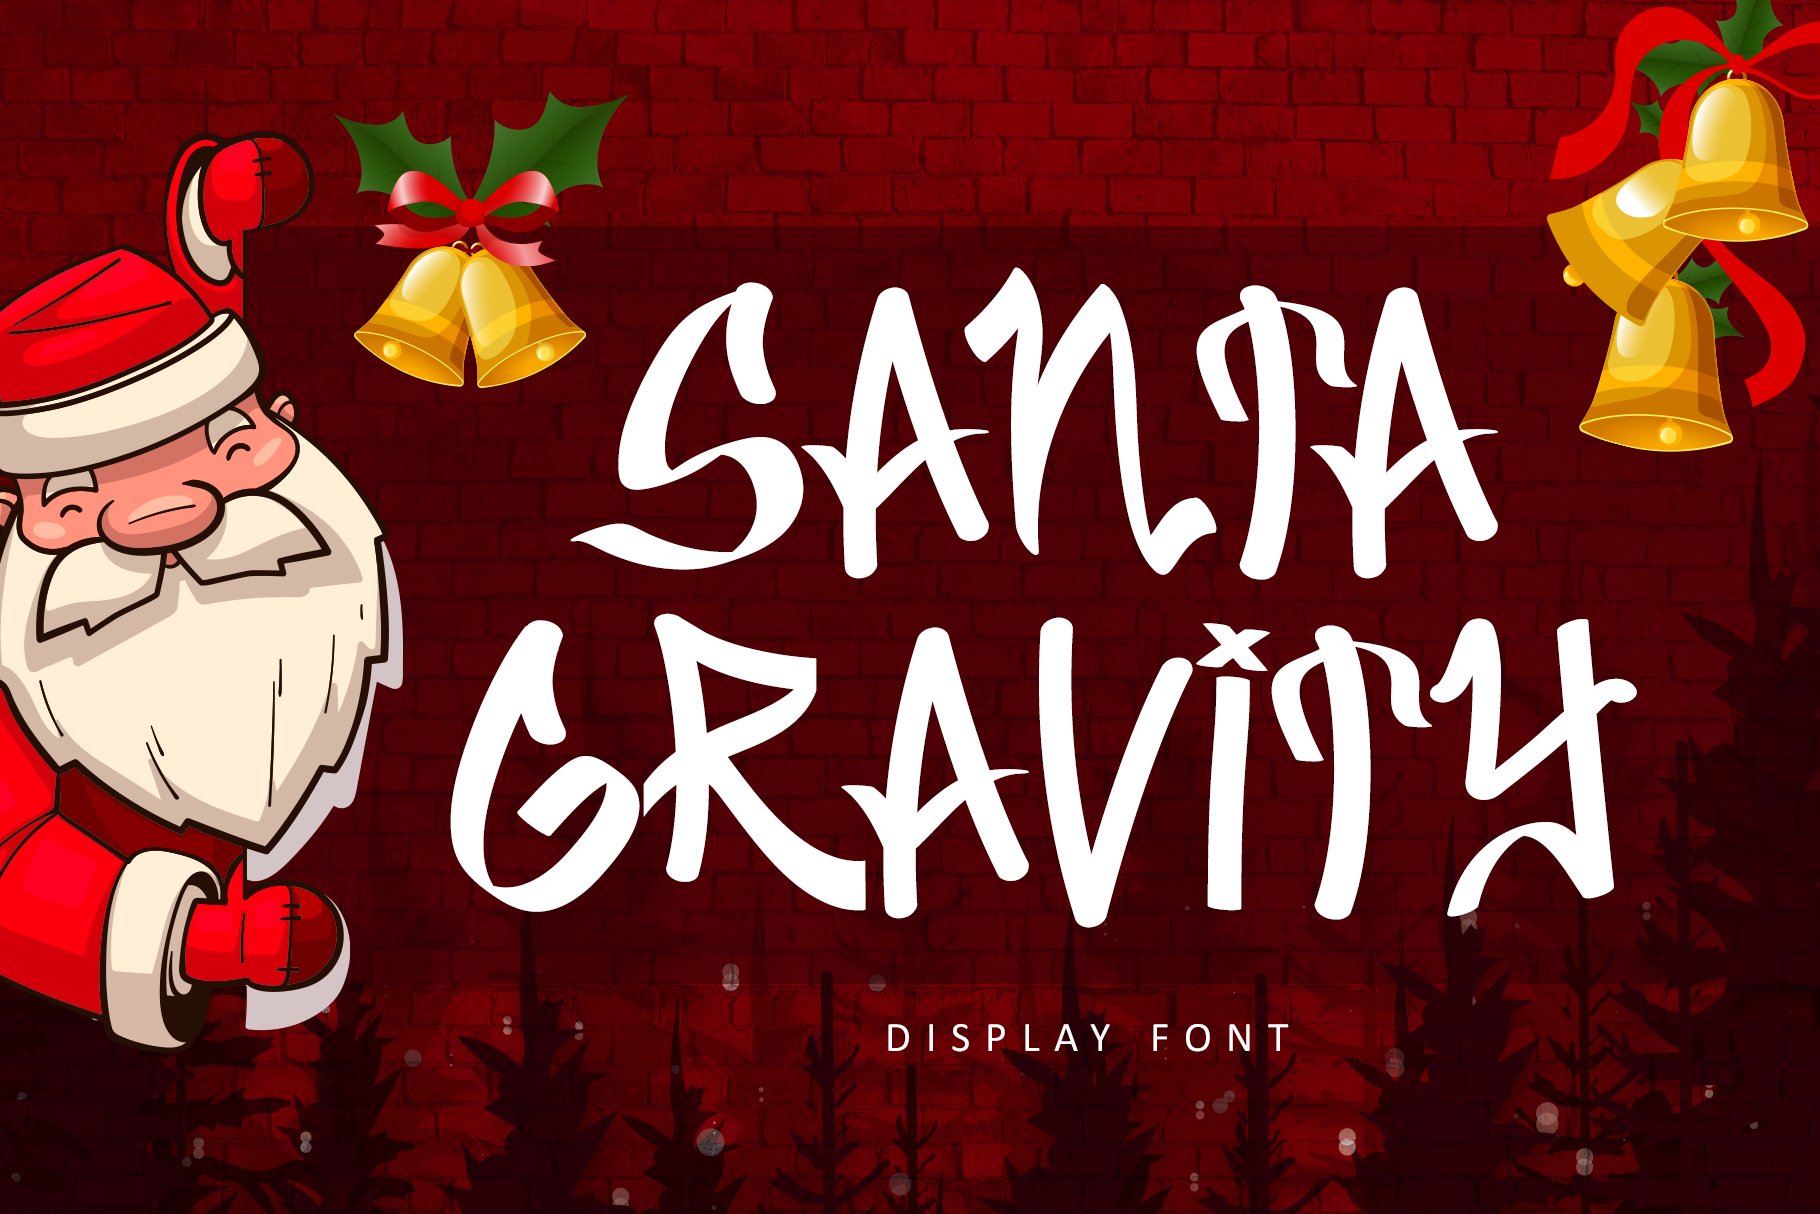 Santa Gravity - Graffiti Font cover image.